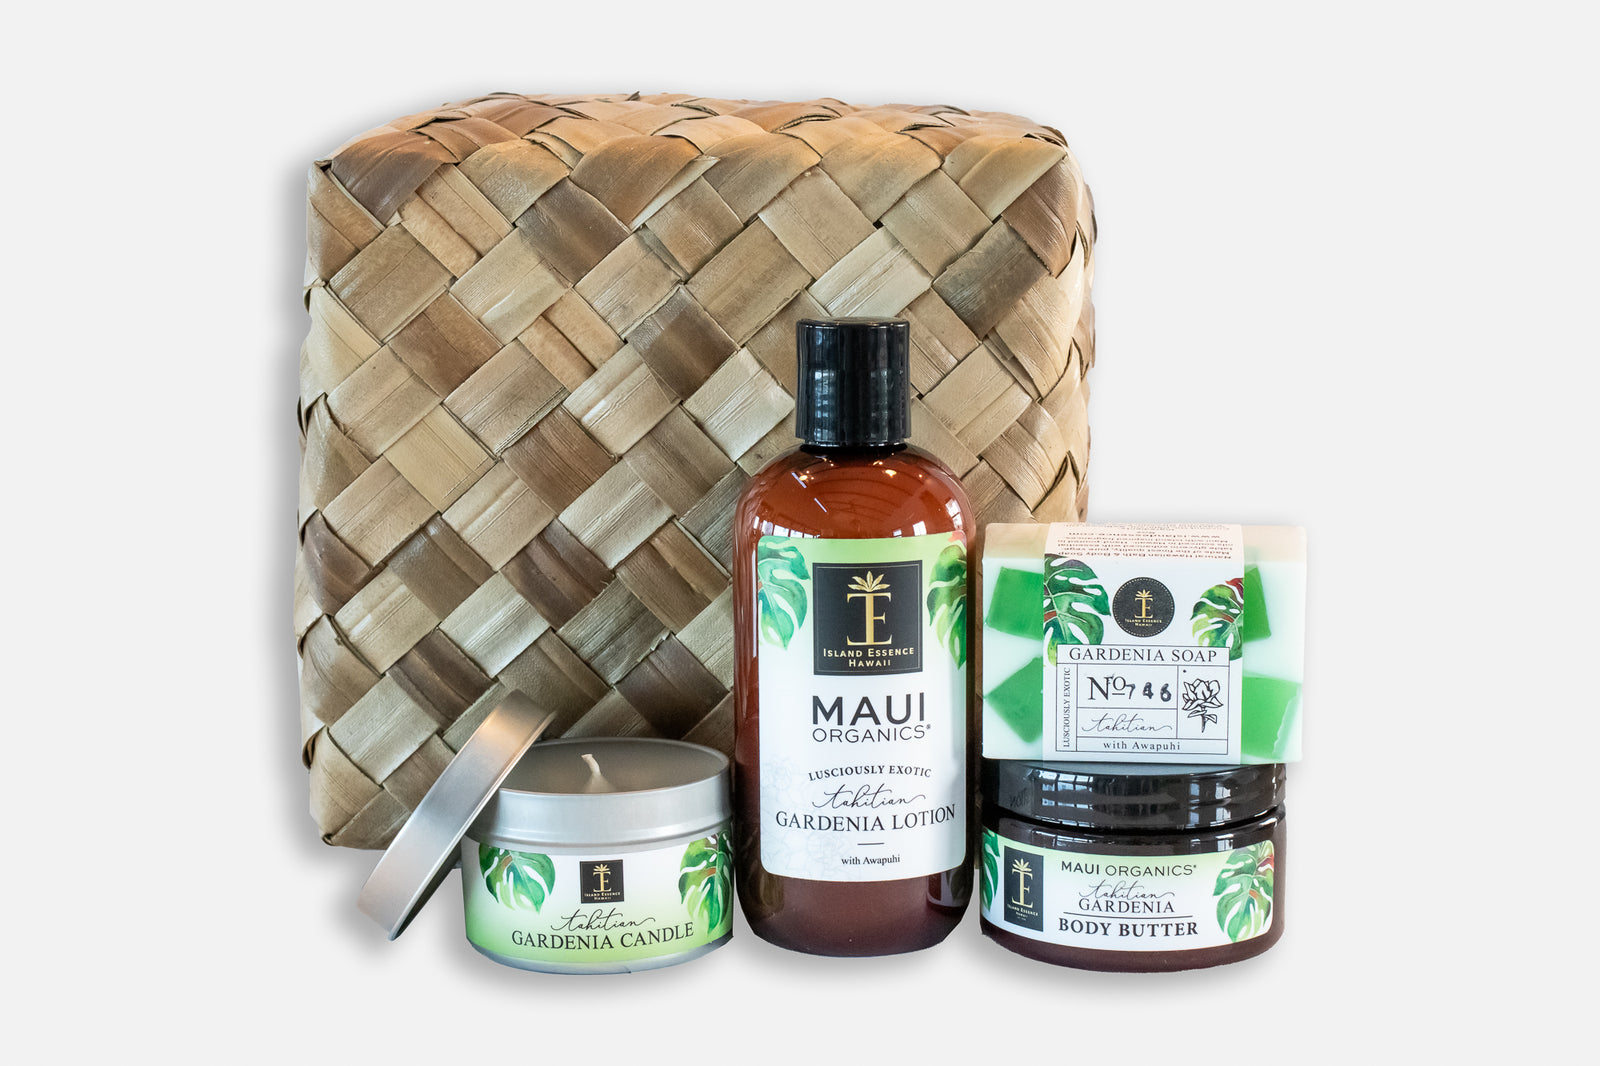 Pop-Up Mākeke - Island Essence - Maui Organics Lauhala Gift Collection - Tahitian Gardenia - Front View